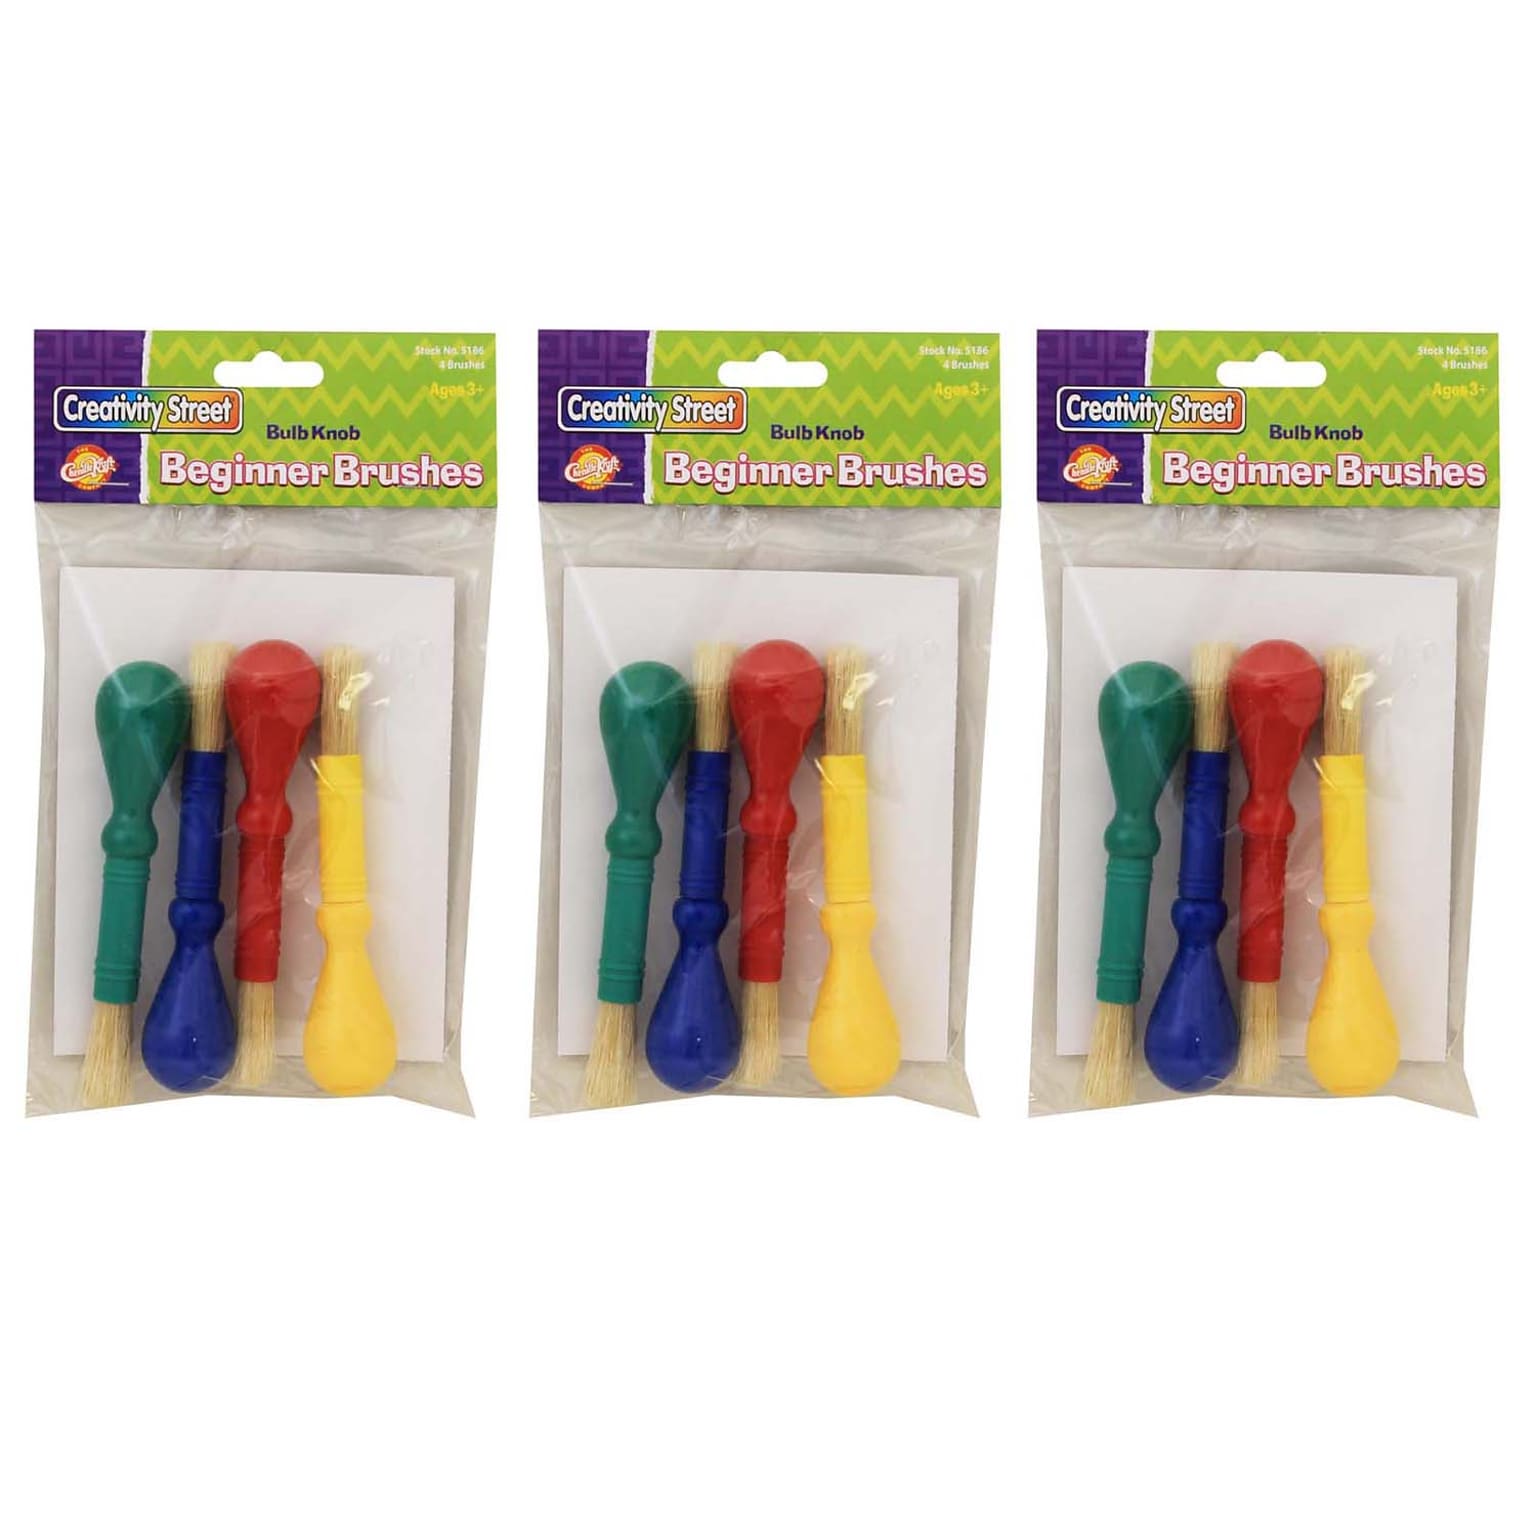 Creativity Street® Beginner Paint Brushes, 5.5 Long Bulb Knob Handles, Assorted Colors, 4 Per Pack, 3 Packs (CK-5186-3)